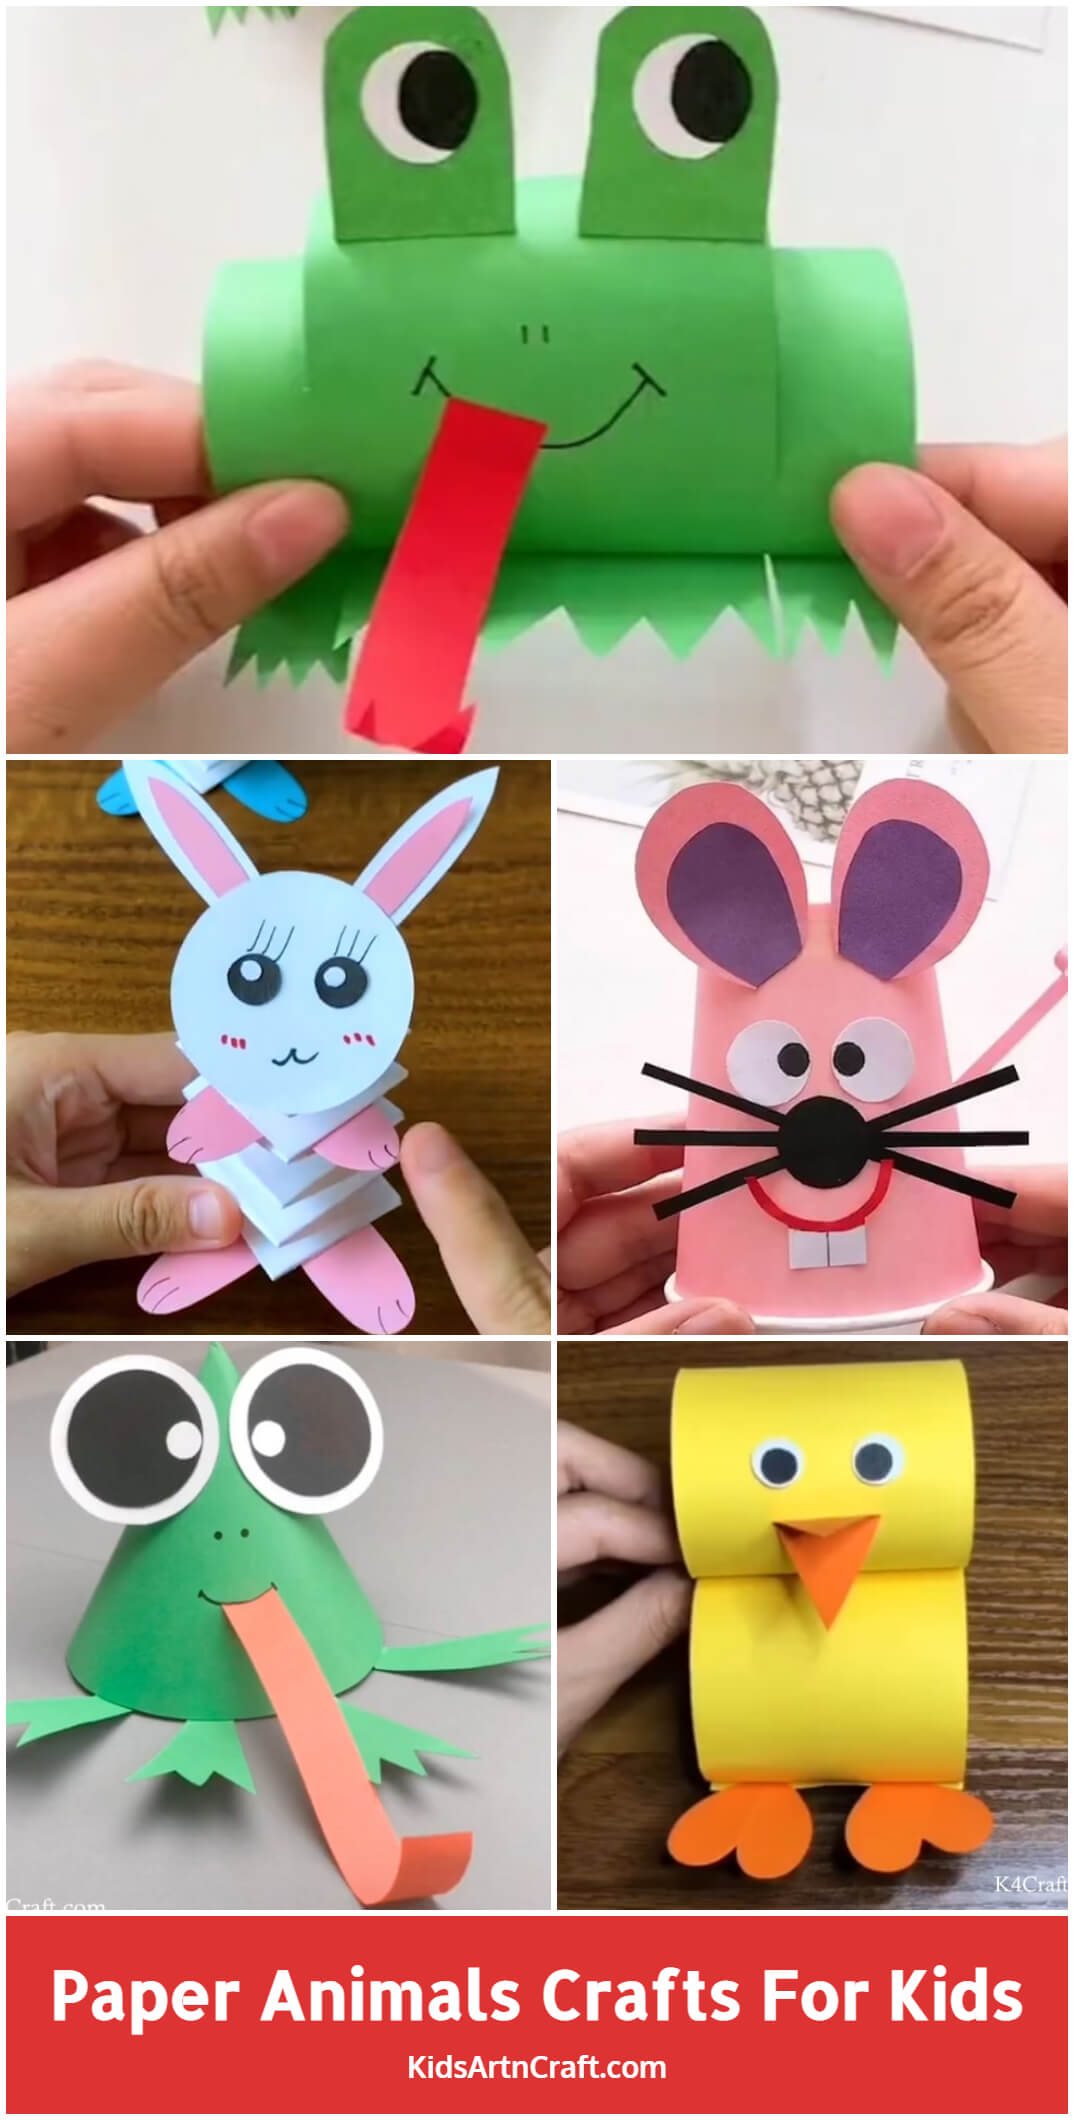 DIY Animal Paper Crafts: Learning Through Creativity